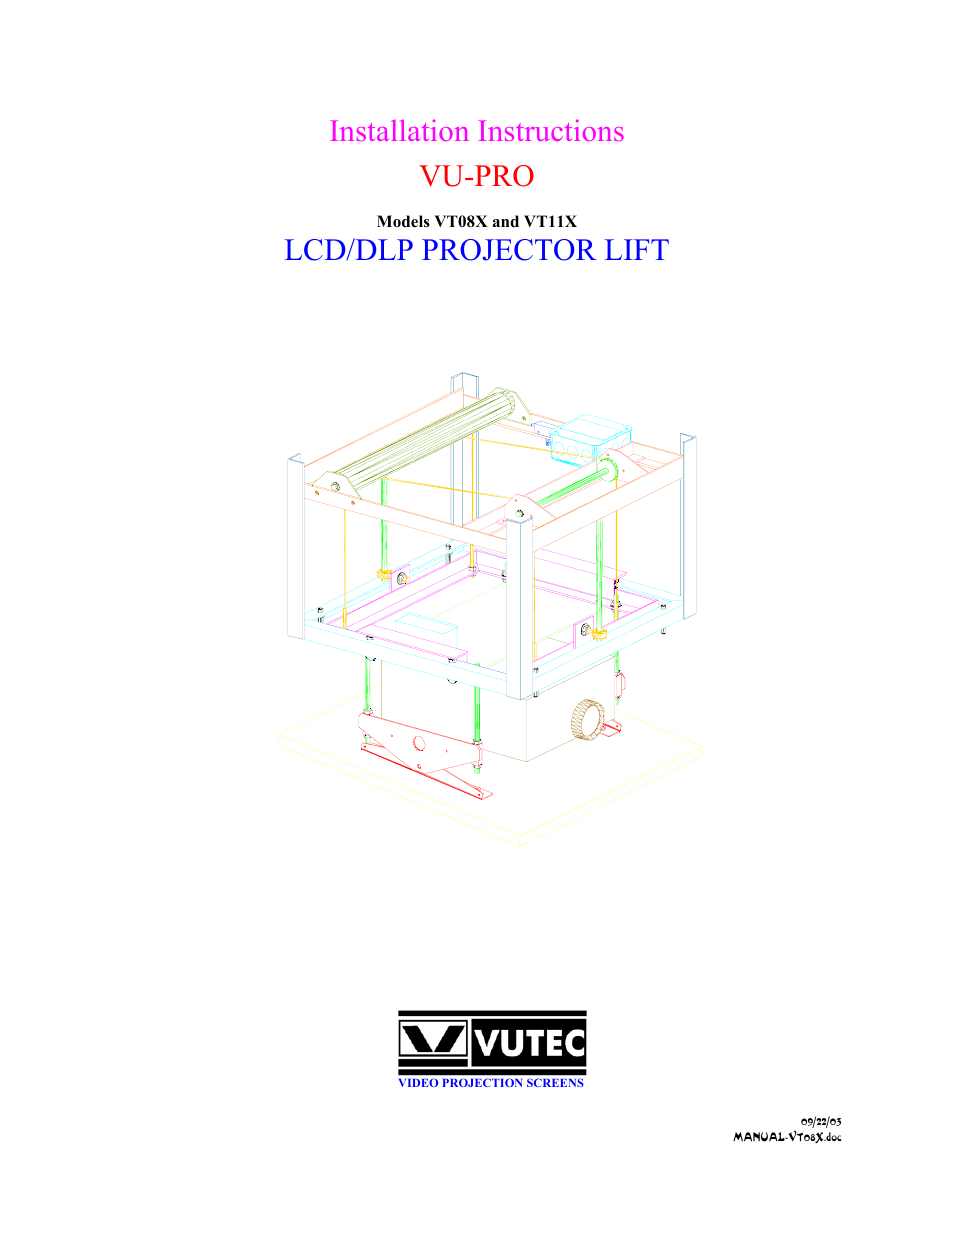 VT11X VU-PRO - Installation Instructions